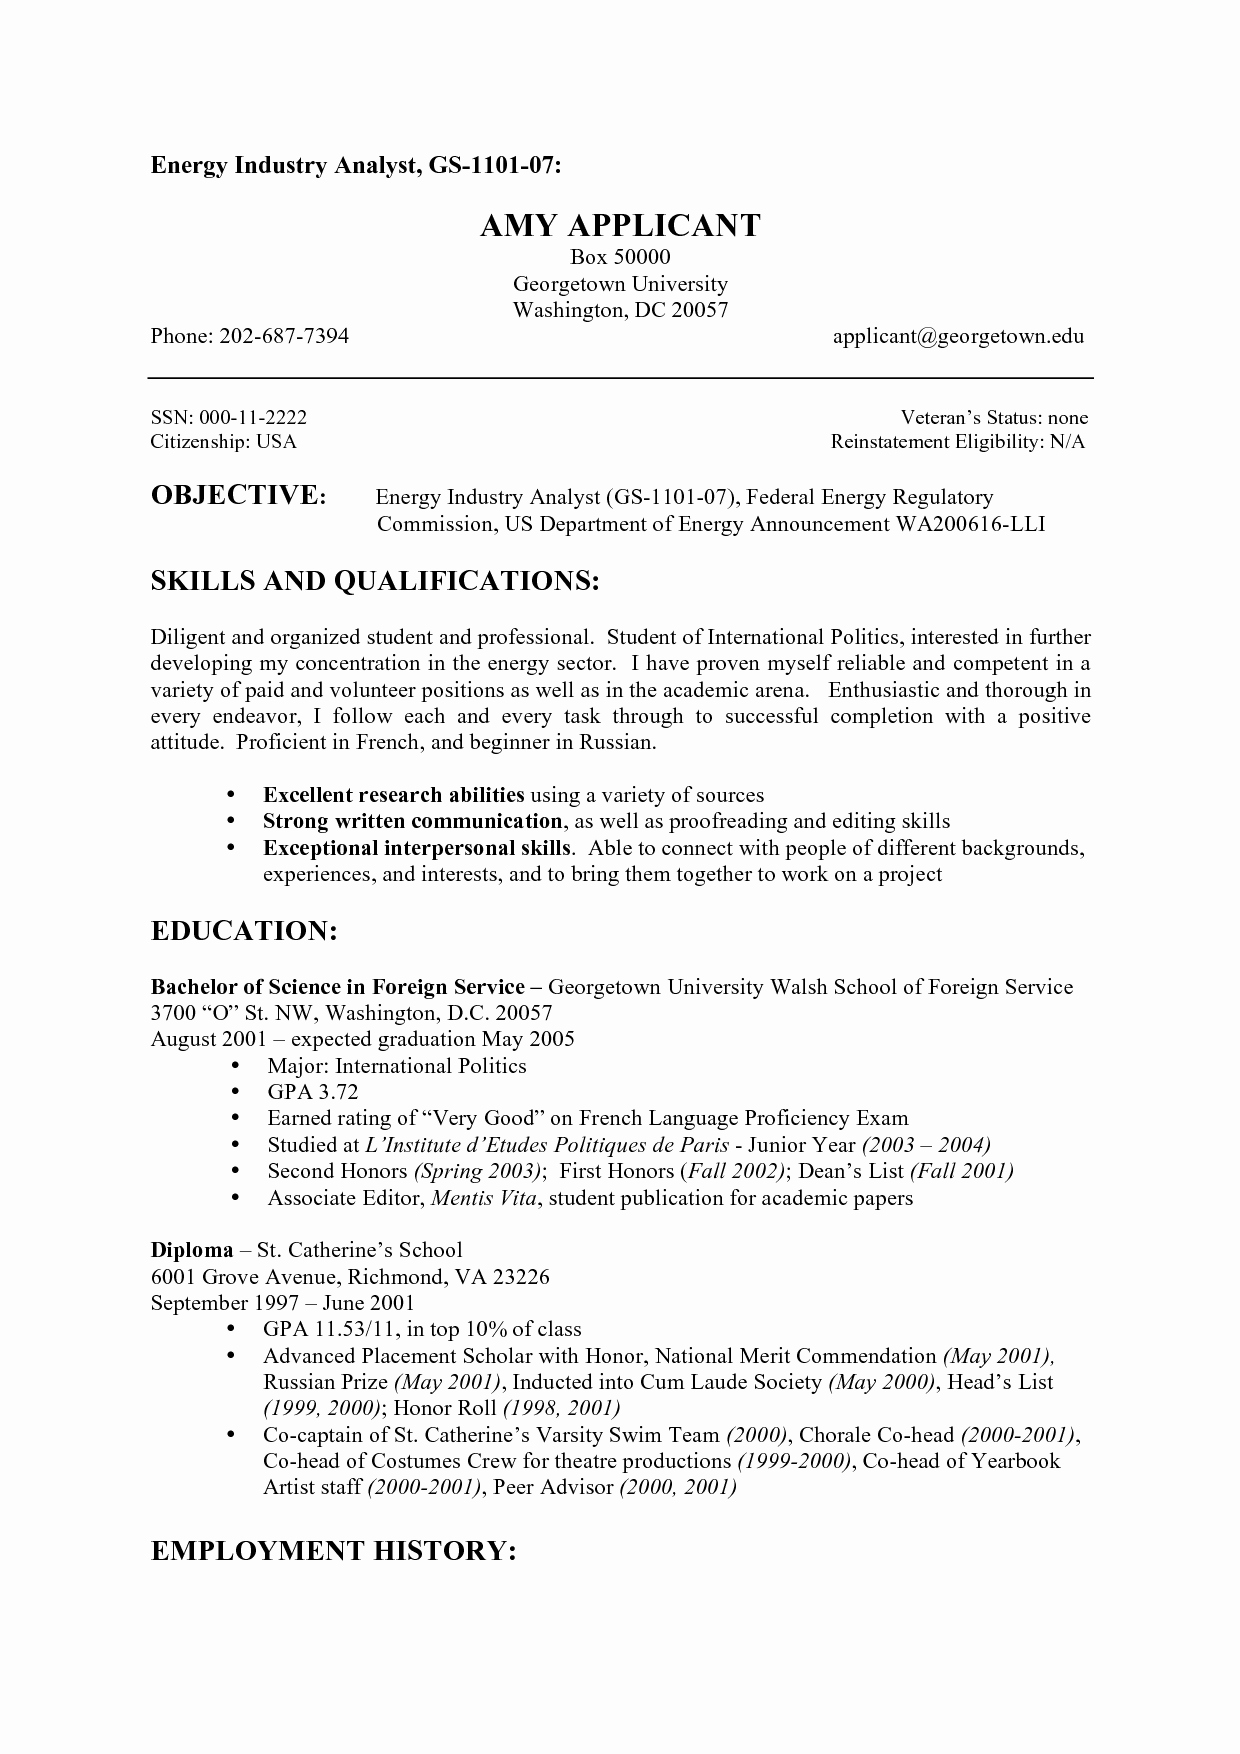 Sample Resume for Federal Jobs Inspirational Federal Resume Cover Letter Sample Resume